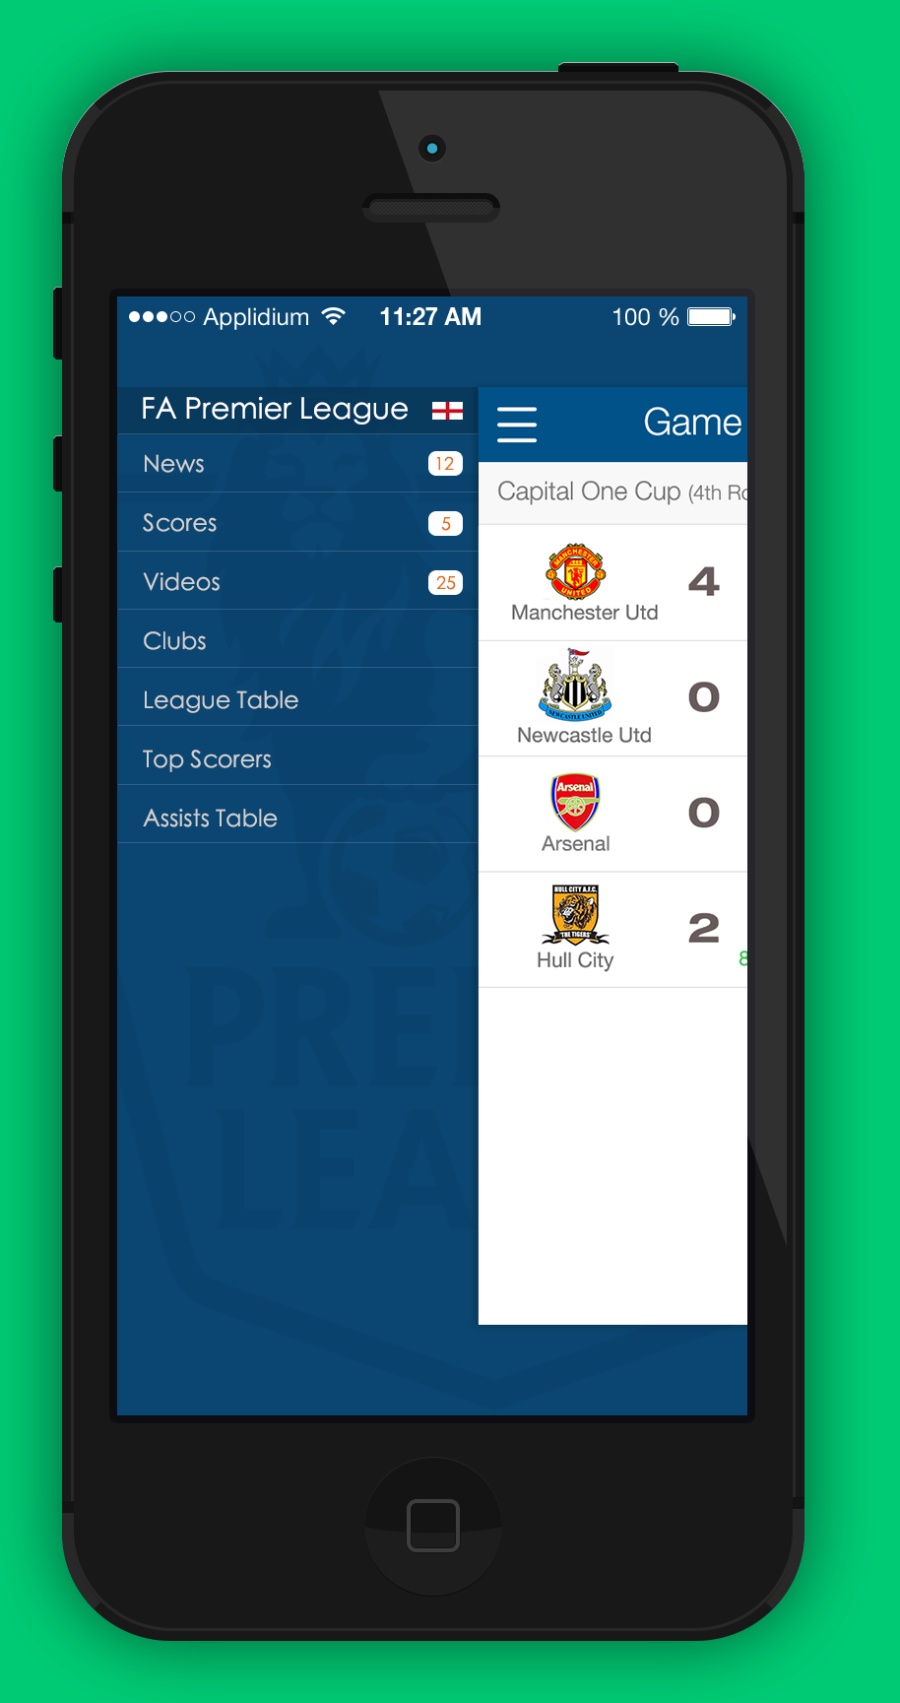 app界面设计--足球应用界面第二部分|移动设备